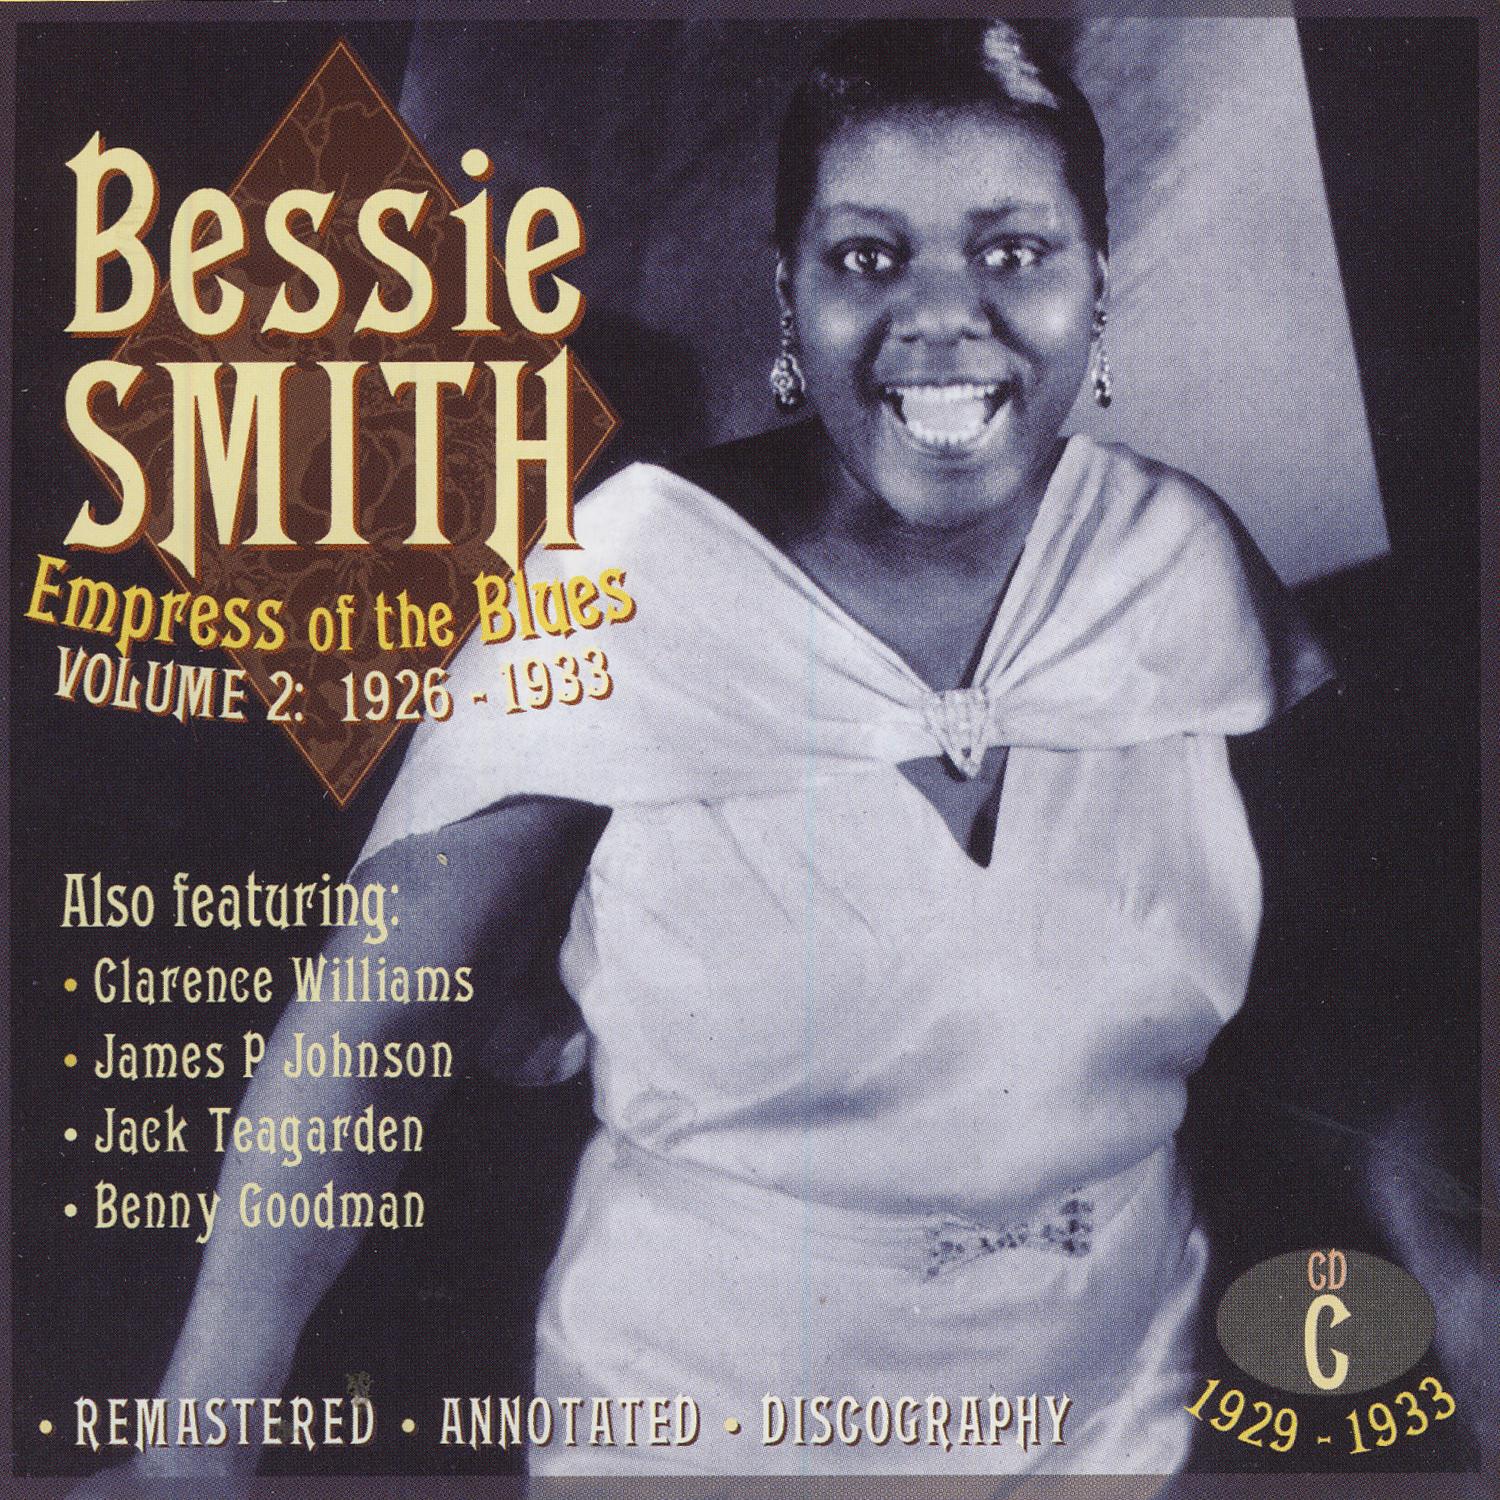 Empress Of The Blues Volume 2: 1926-1933 (CD C, 1929-1933)